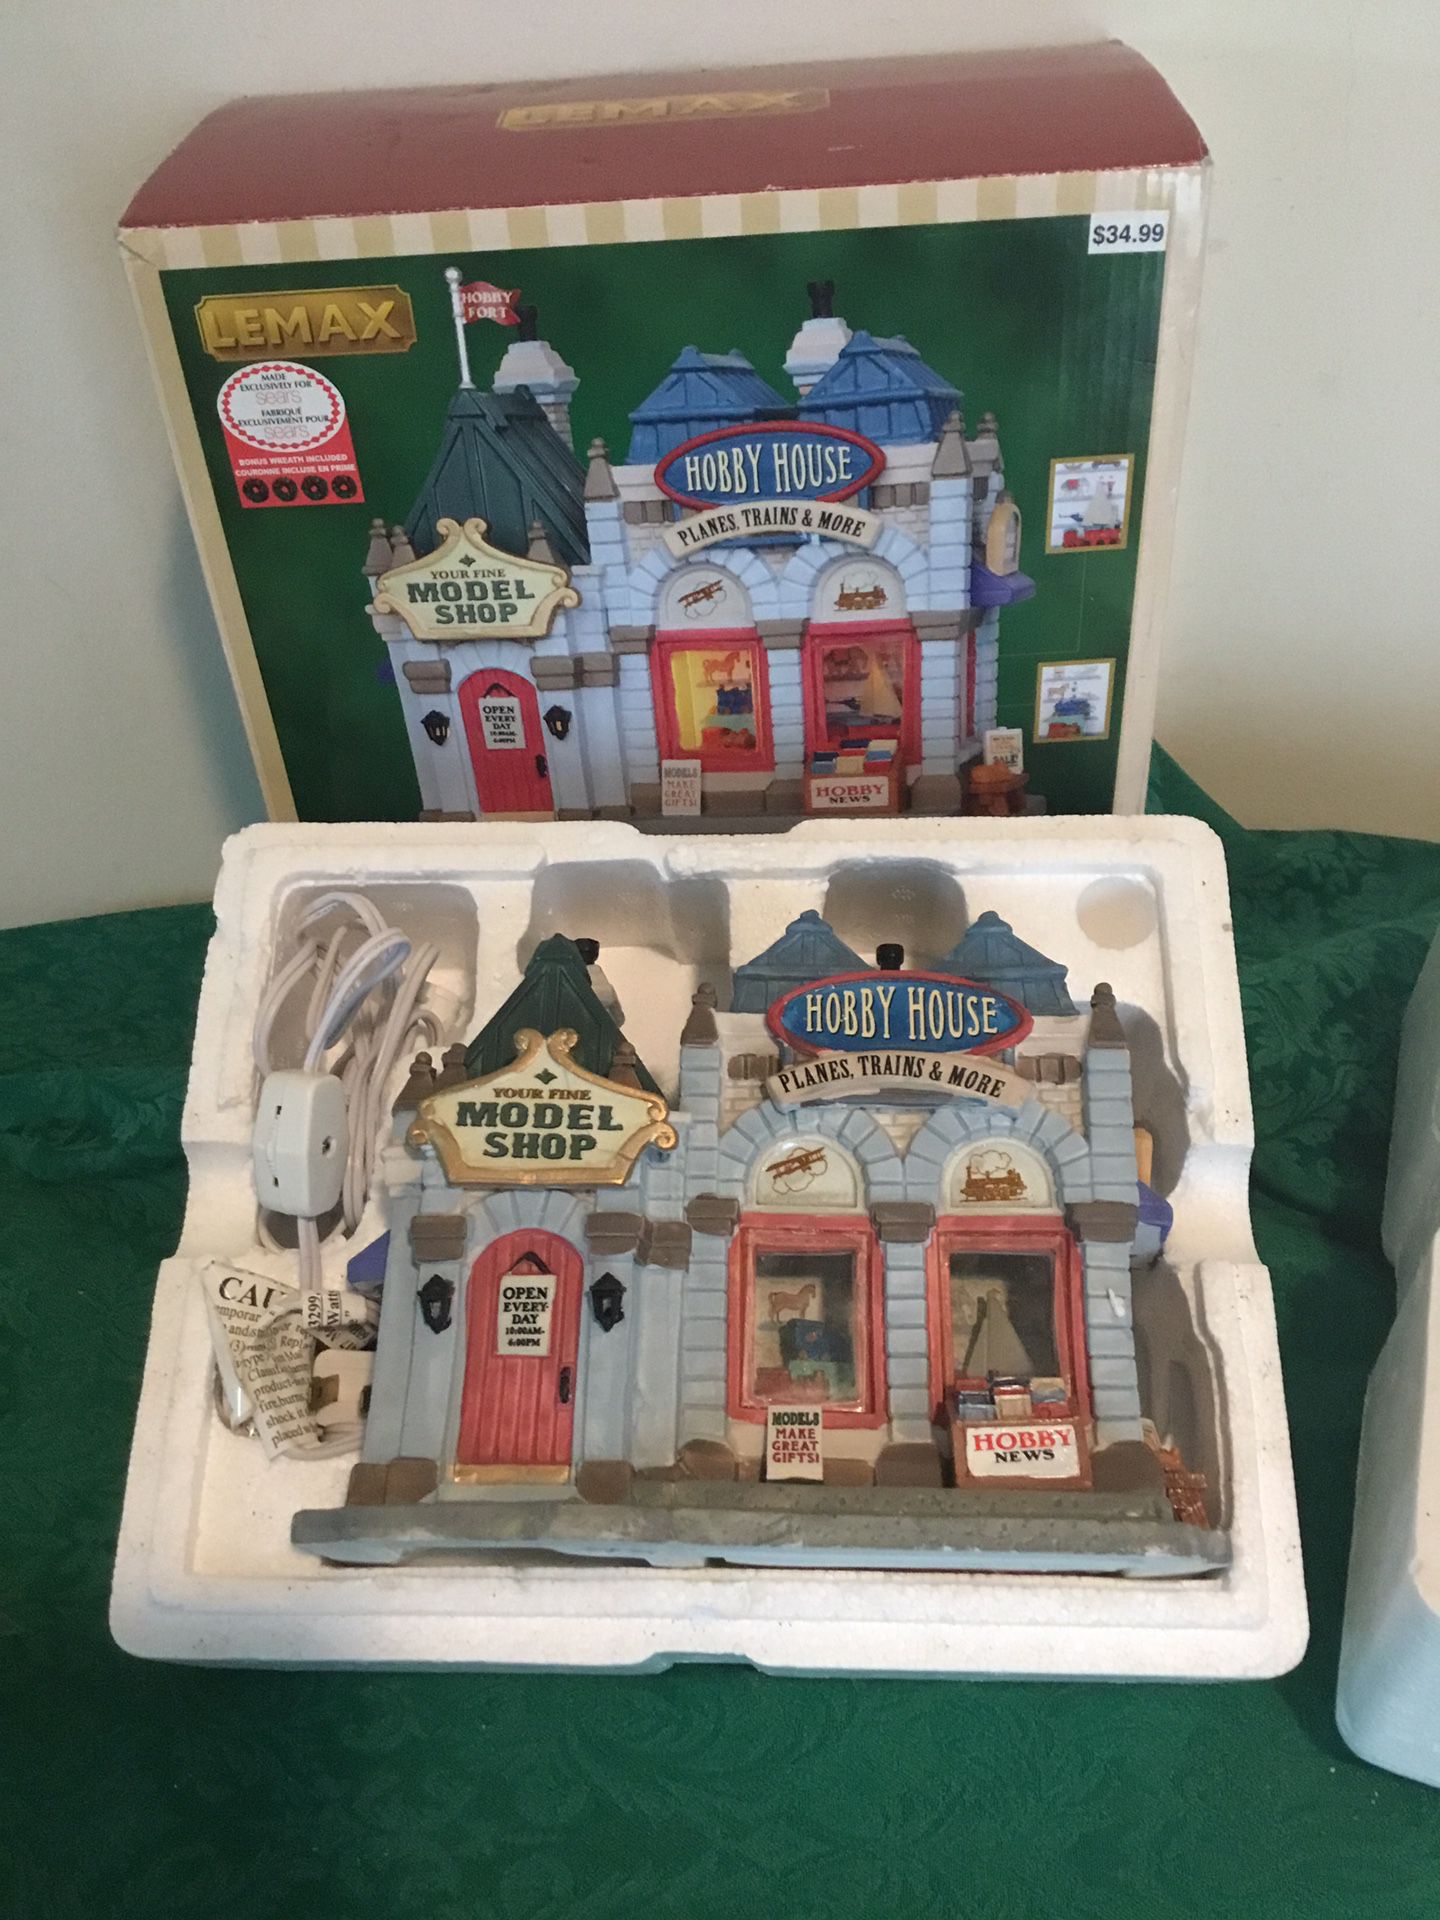 LeMax Hobby House model shop porcelain Christmas original box